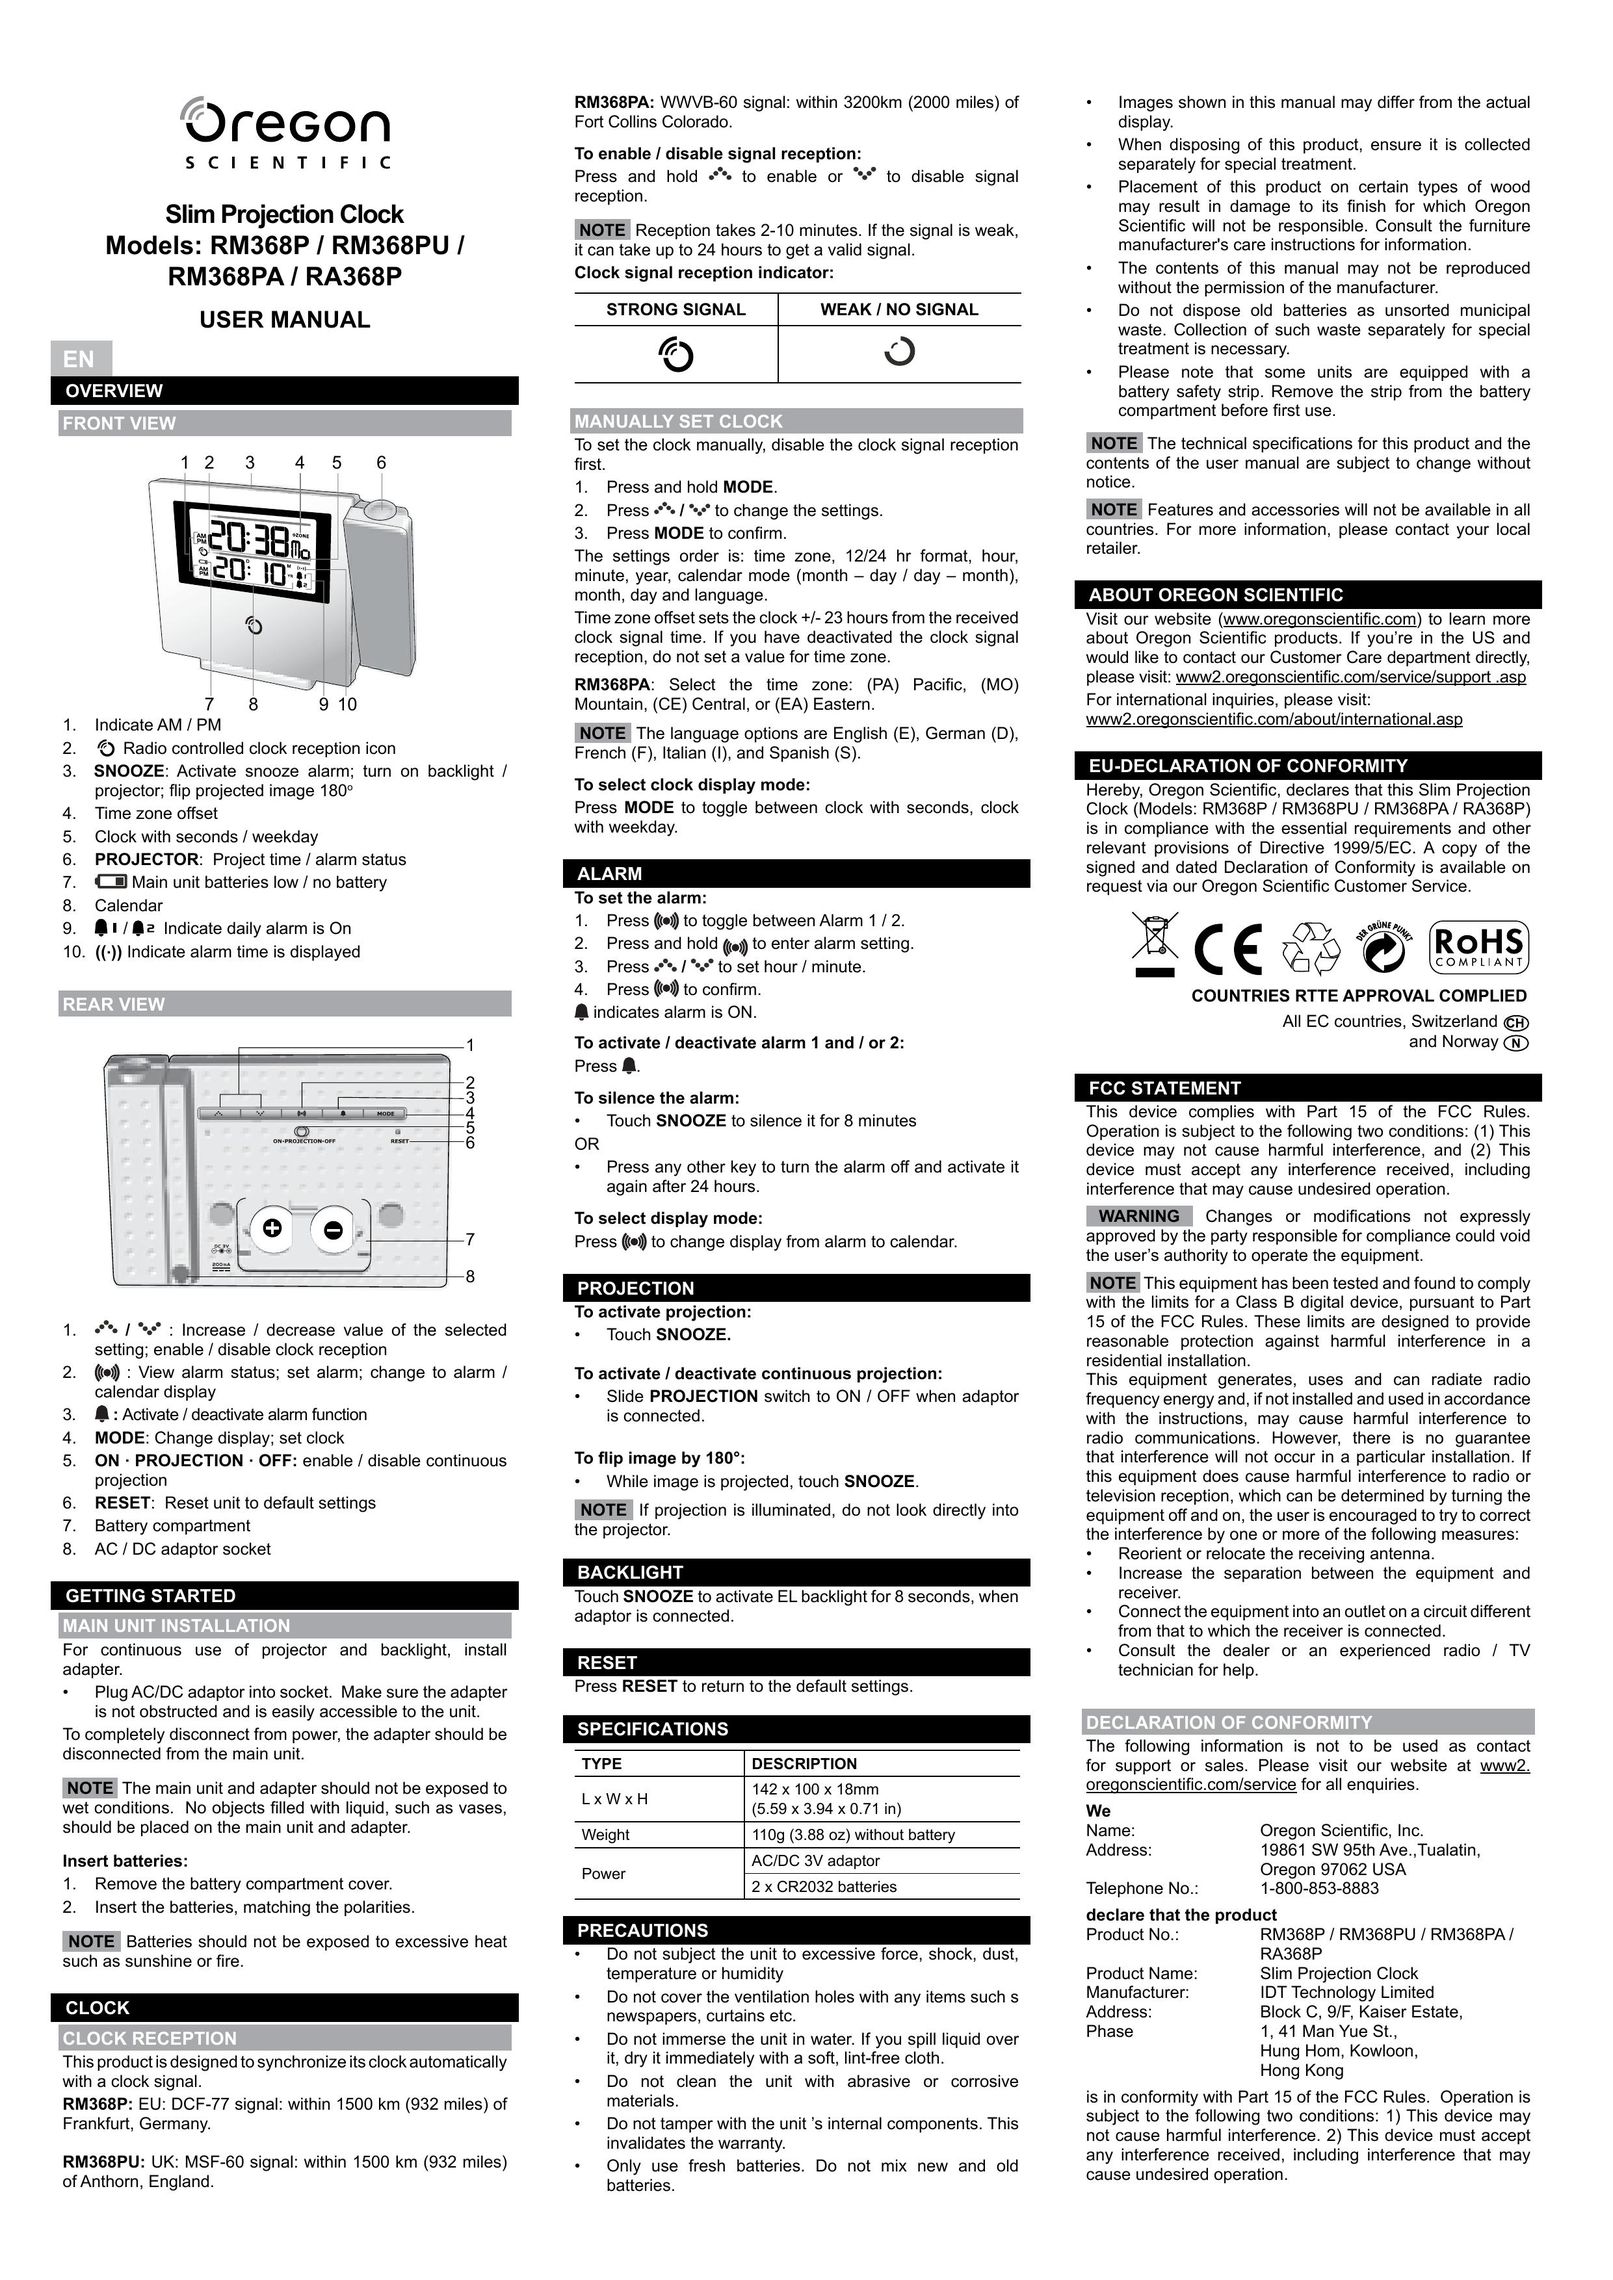 Oregon RM368PU Clock User Manual